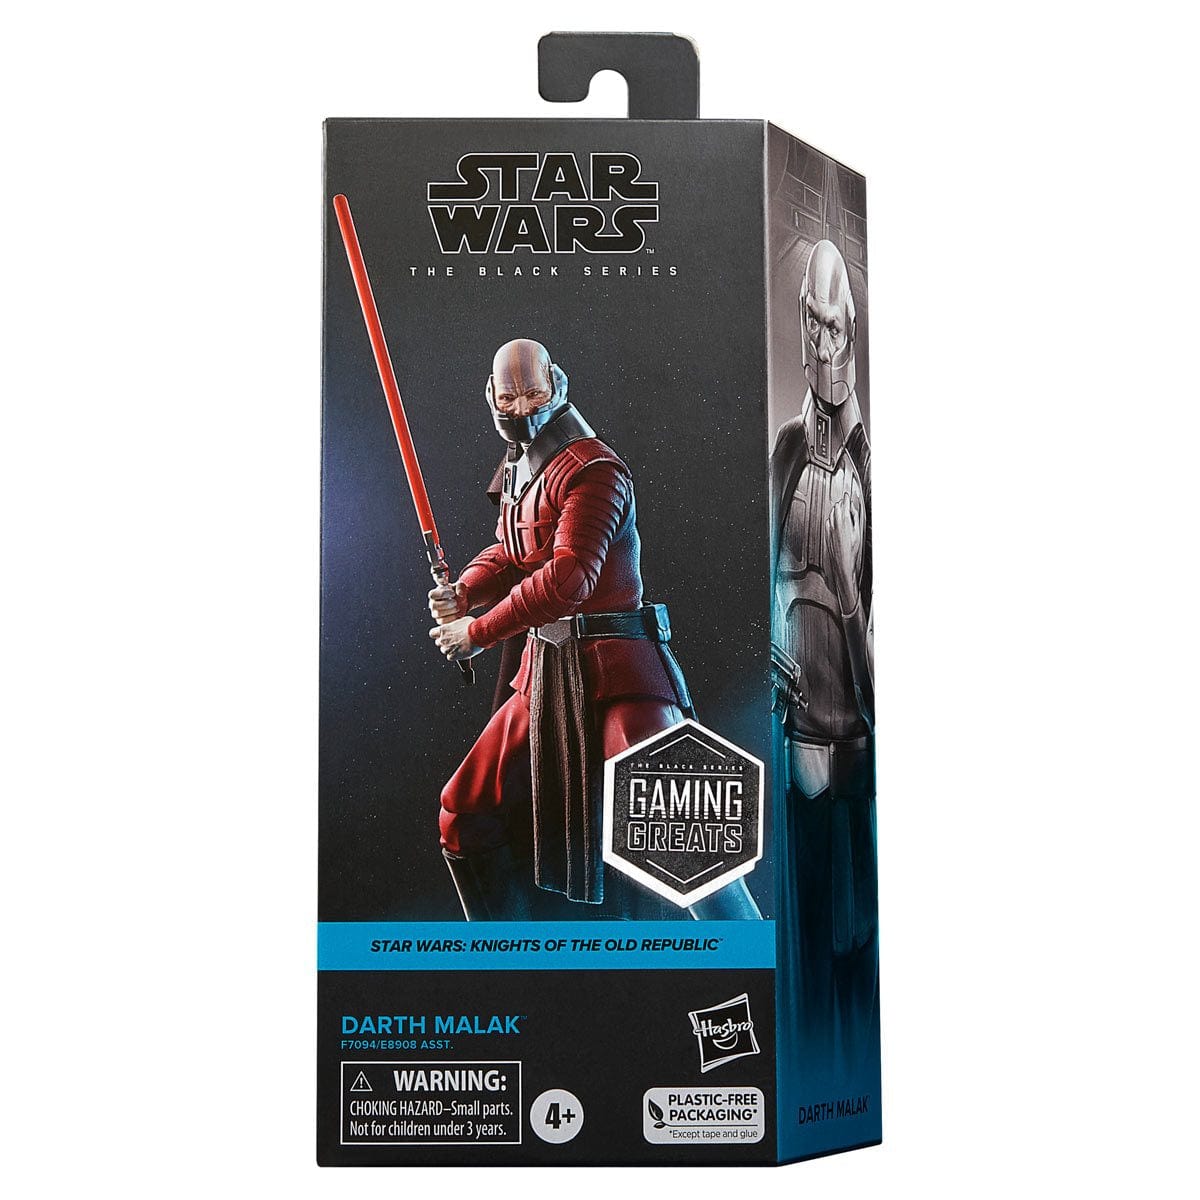 Star Wars The Black Series 6-Inch Darth Malak Action Figure Box Art